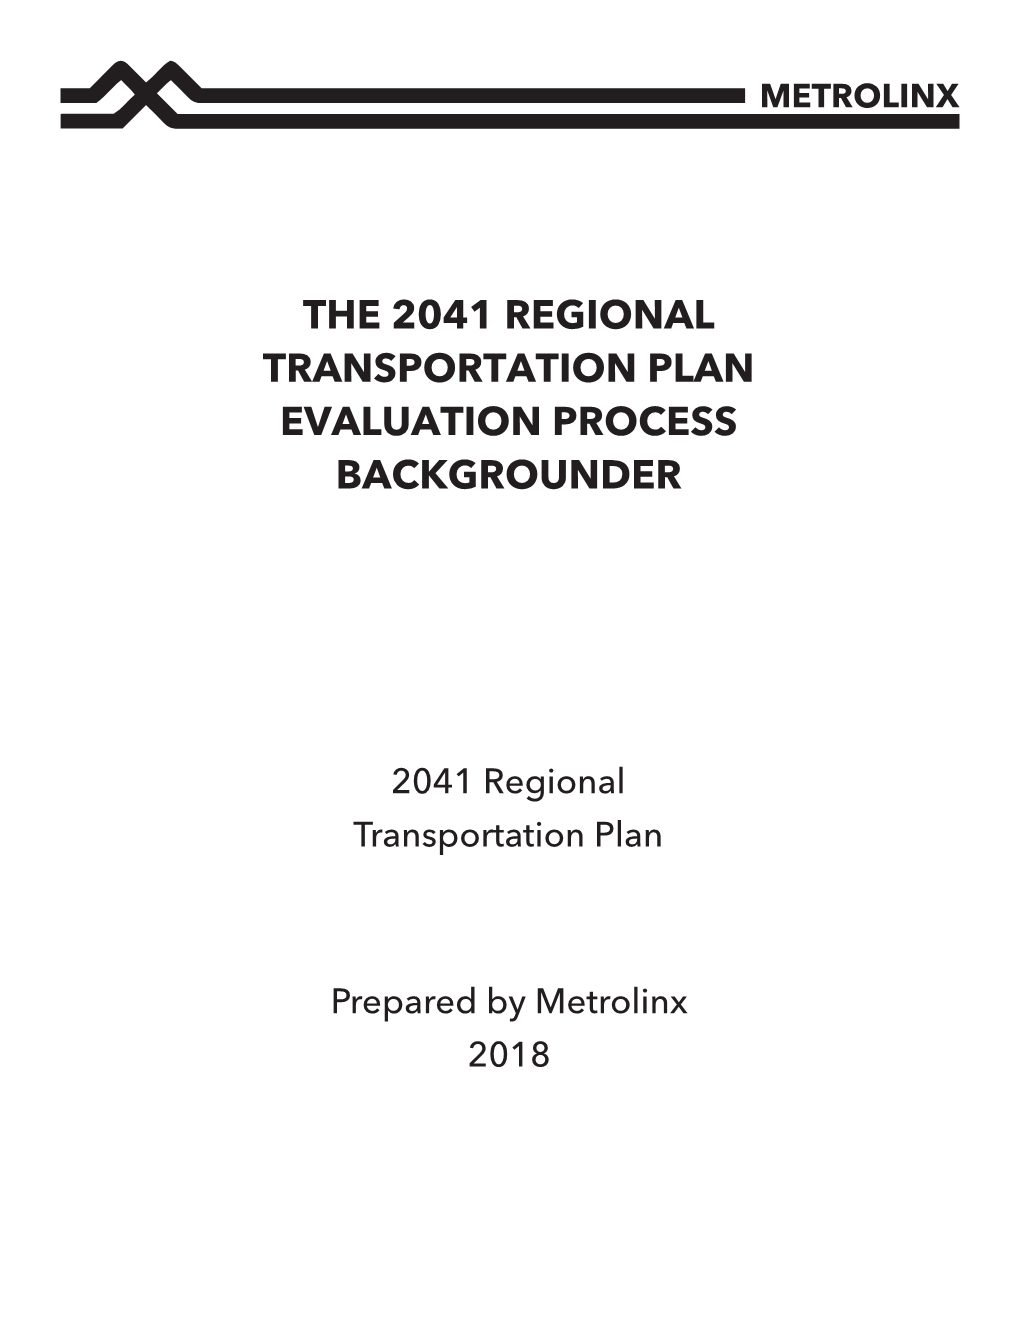 The 2041 Regional Transportation Plan Evaluation Process Backgrounder